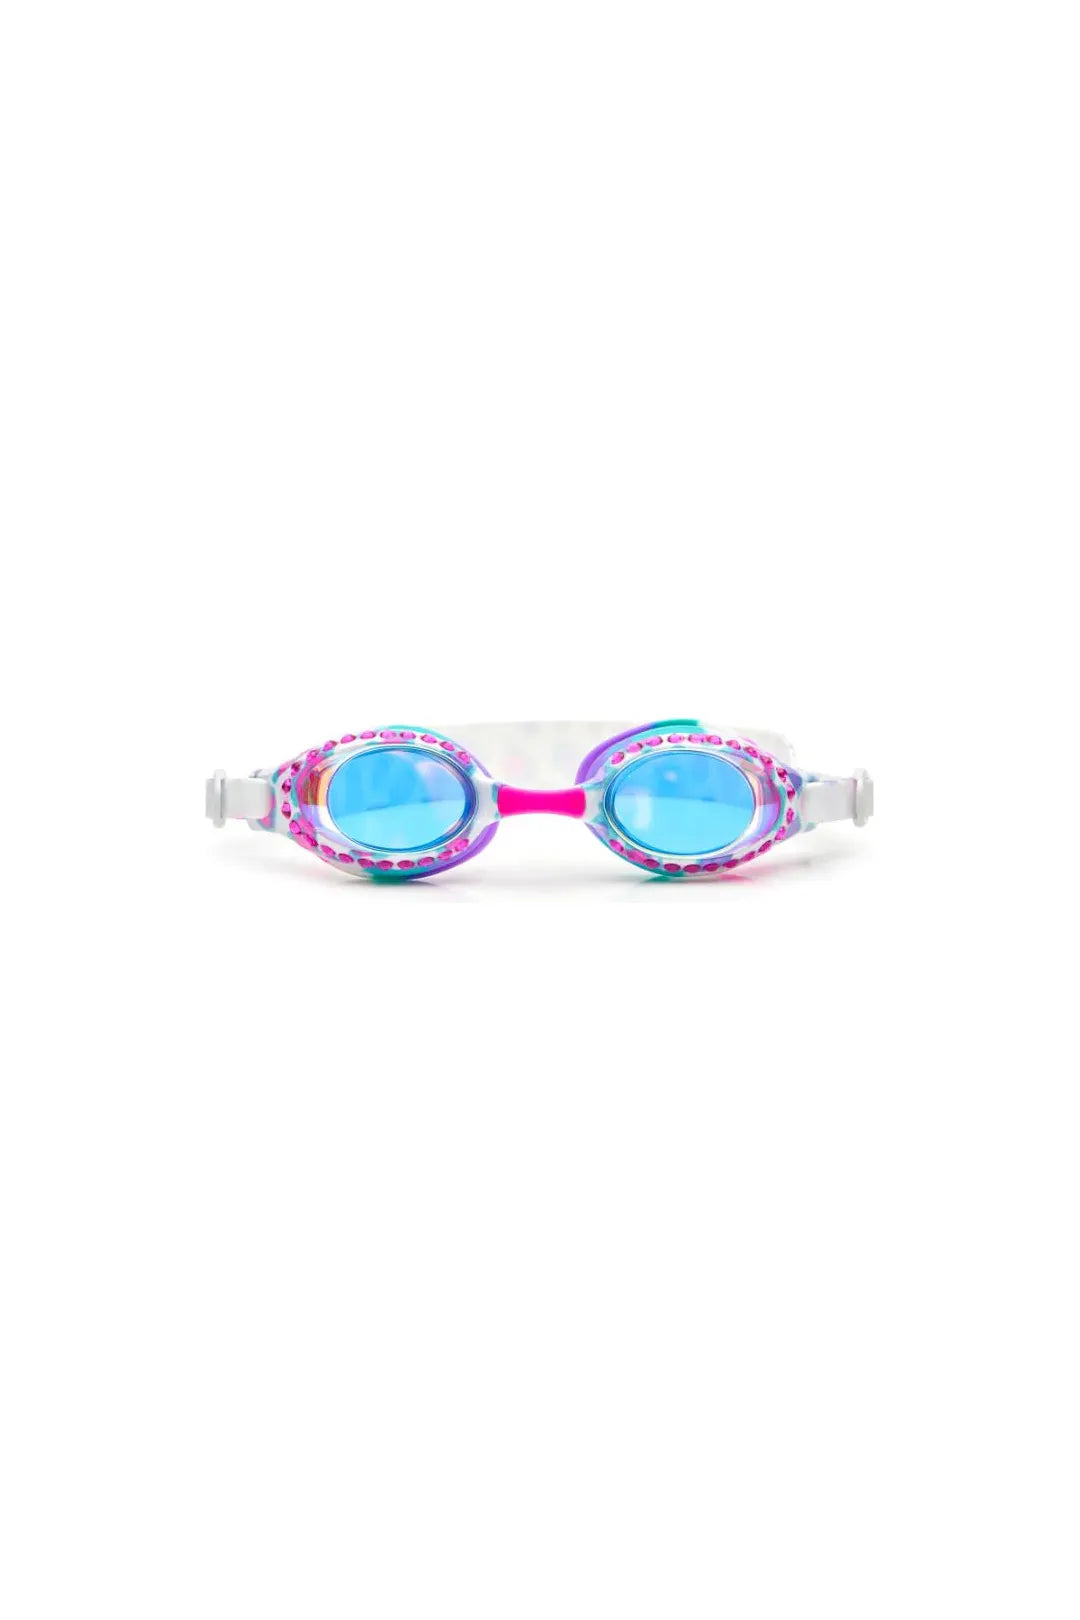 Bling20 Swim Goggles - Cai B -Purrincess Pink